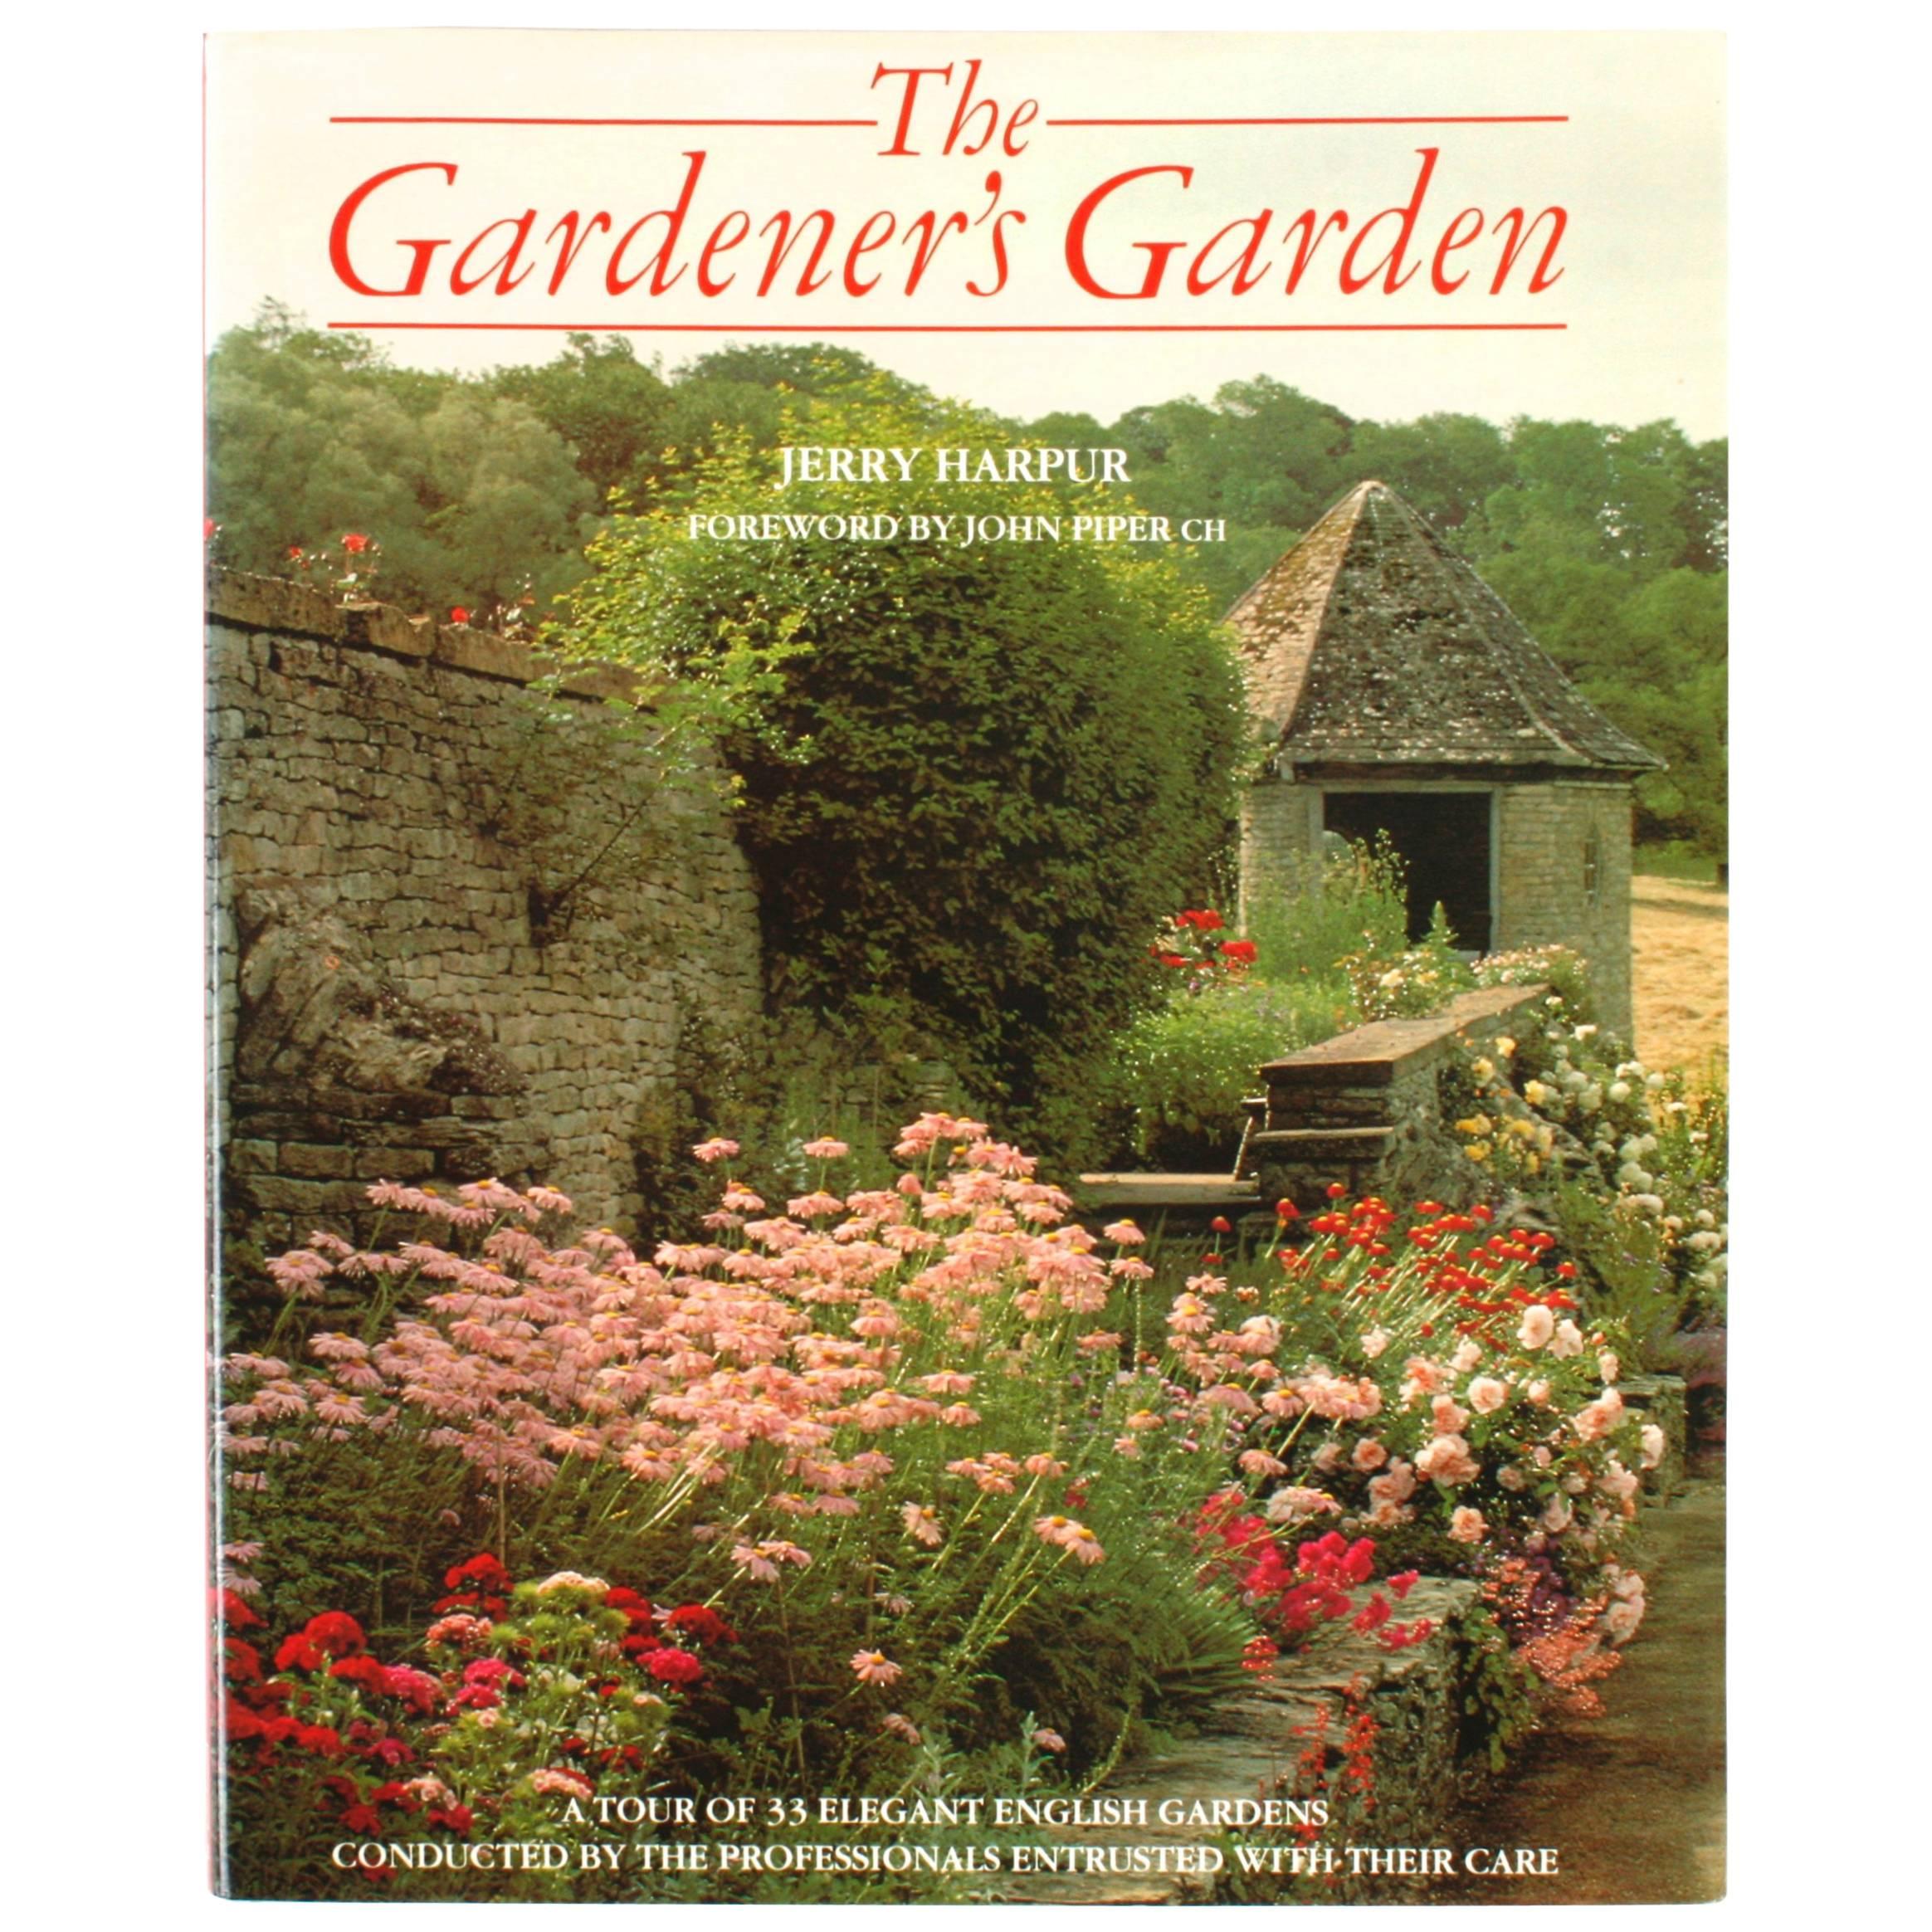 "The Gardener's Garden by Jerry Harpur" Book, First Edition